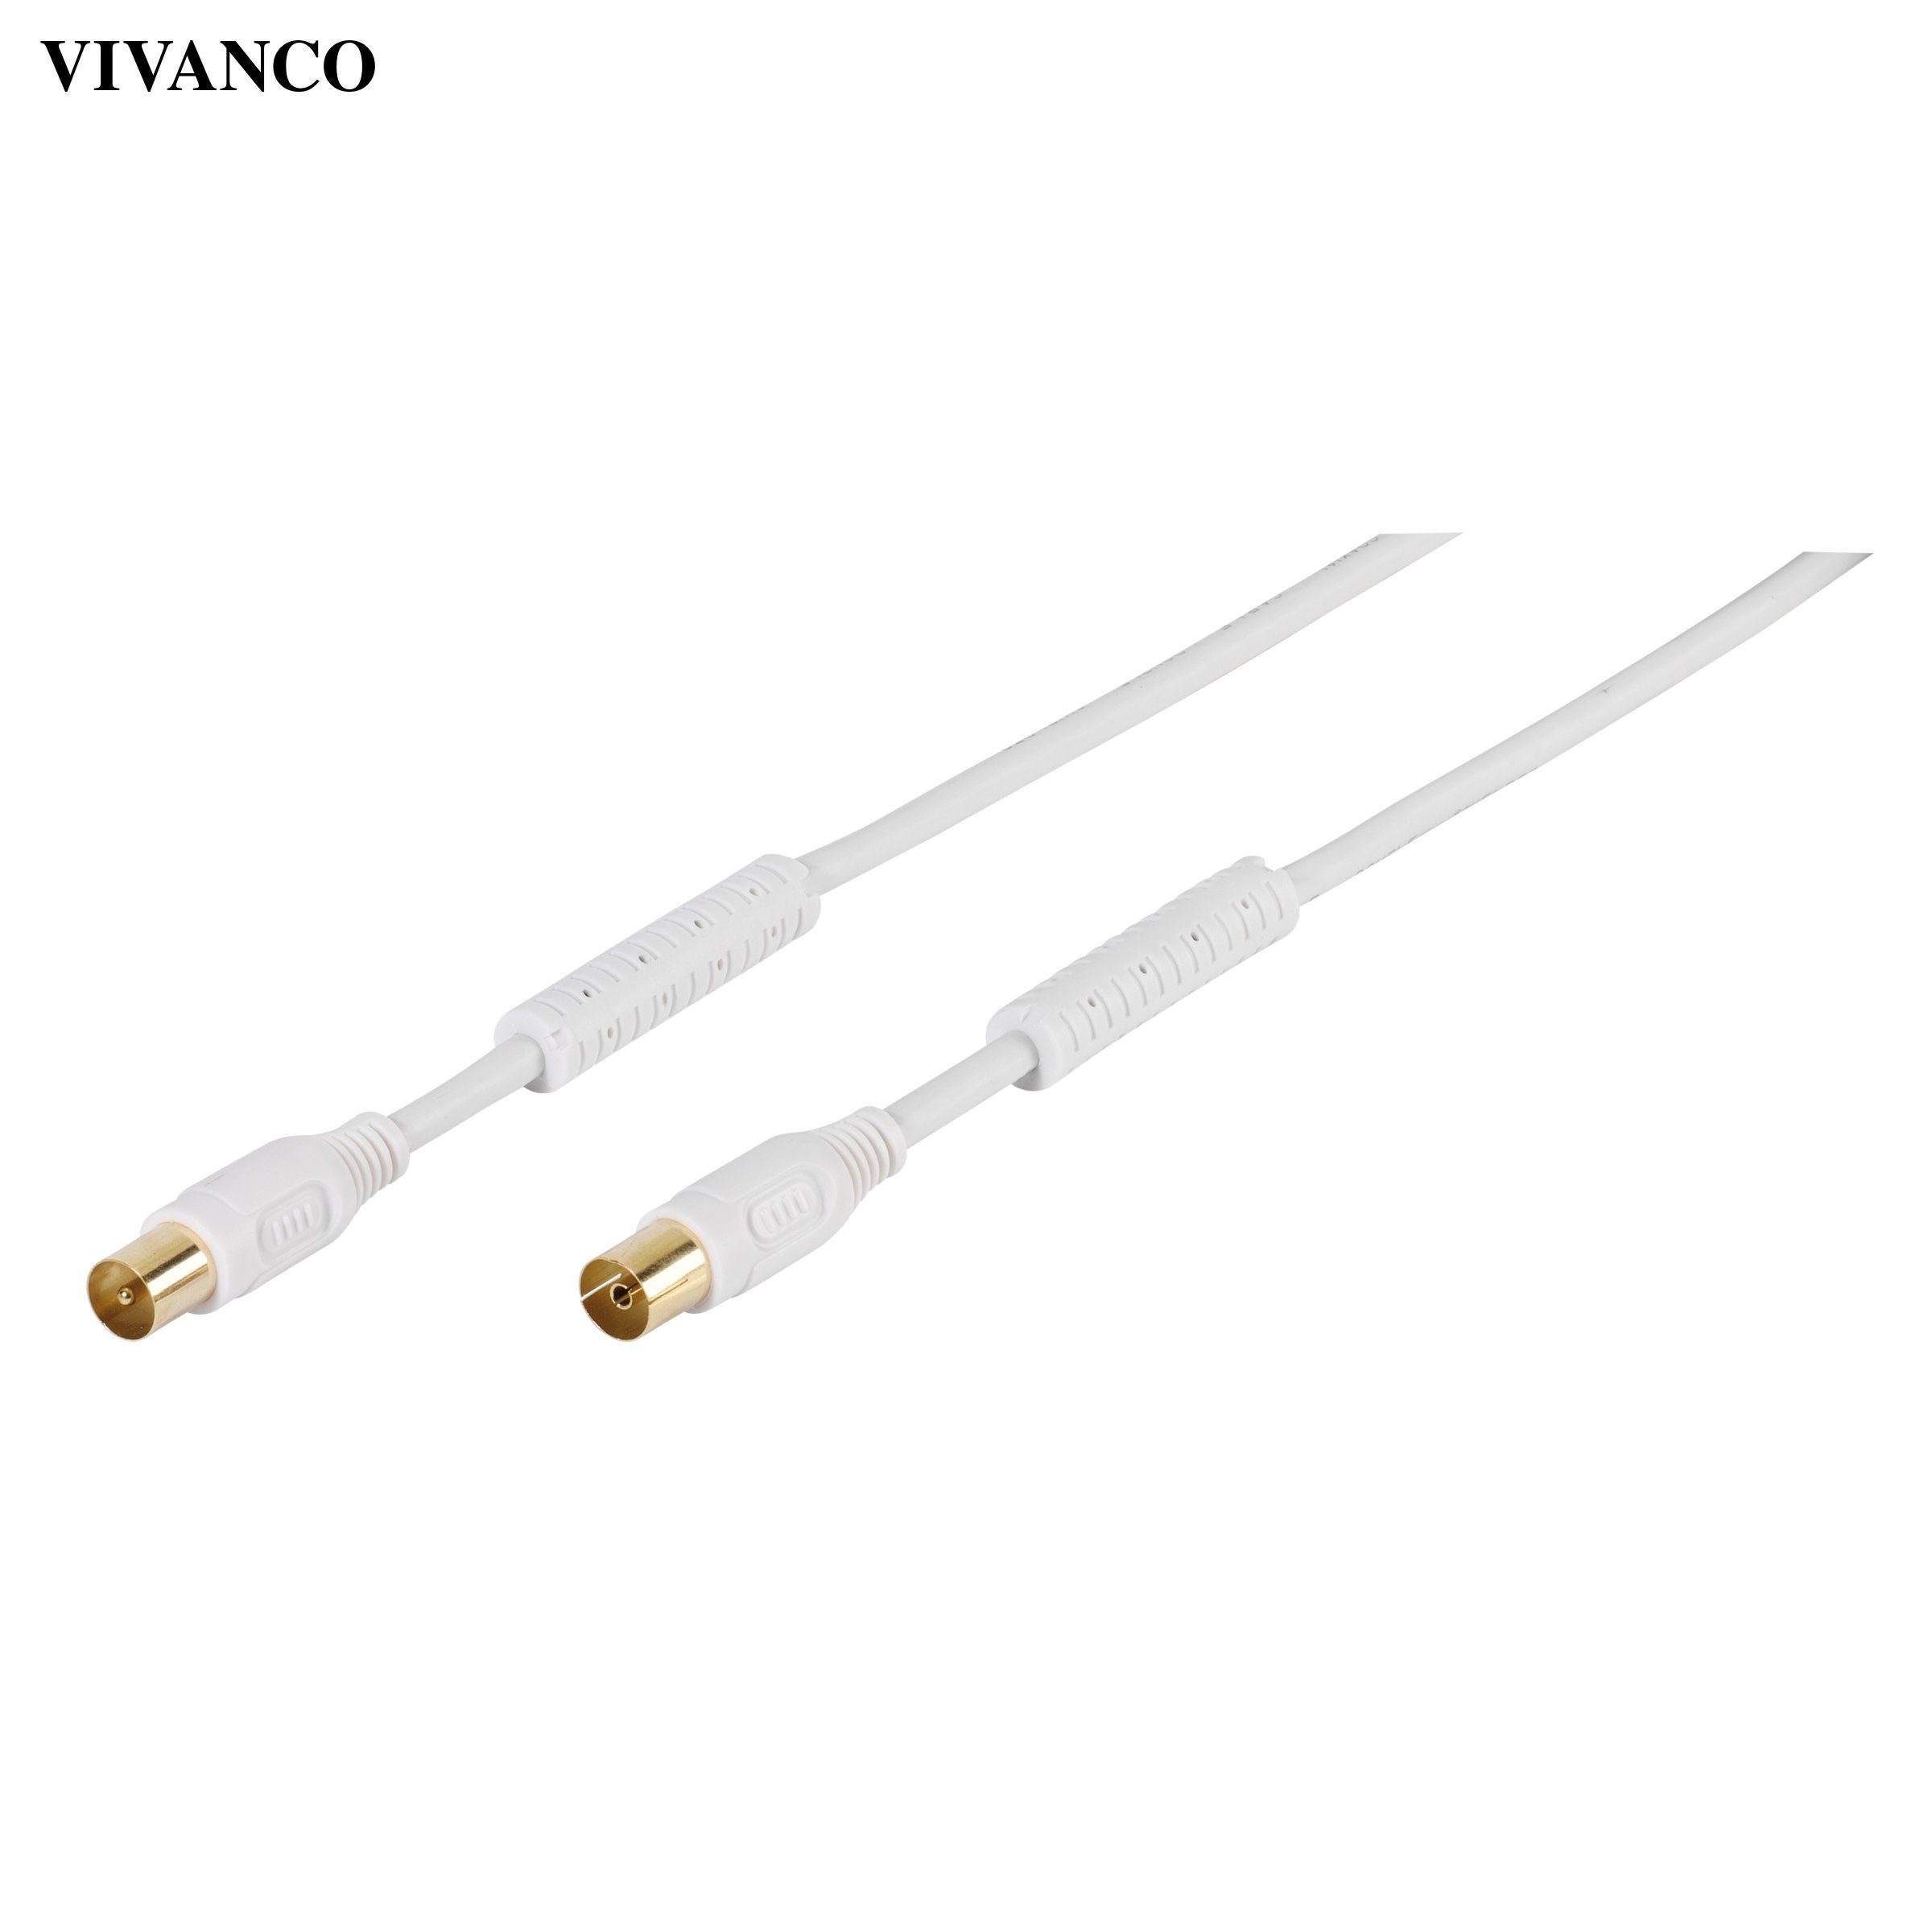 Video-Kabel, Vivanco 100dB Antennenkabel, vergoldet,